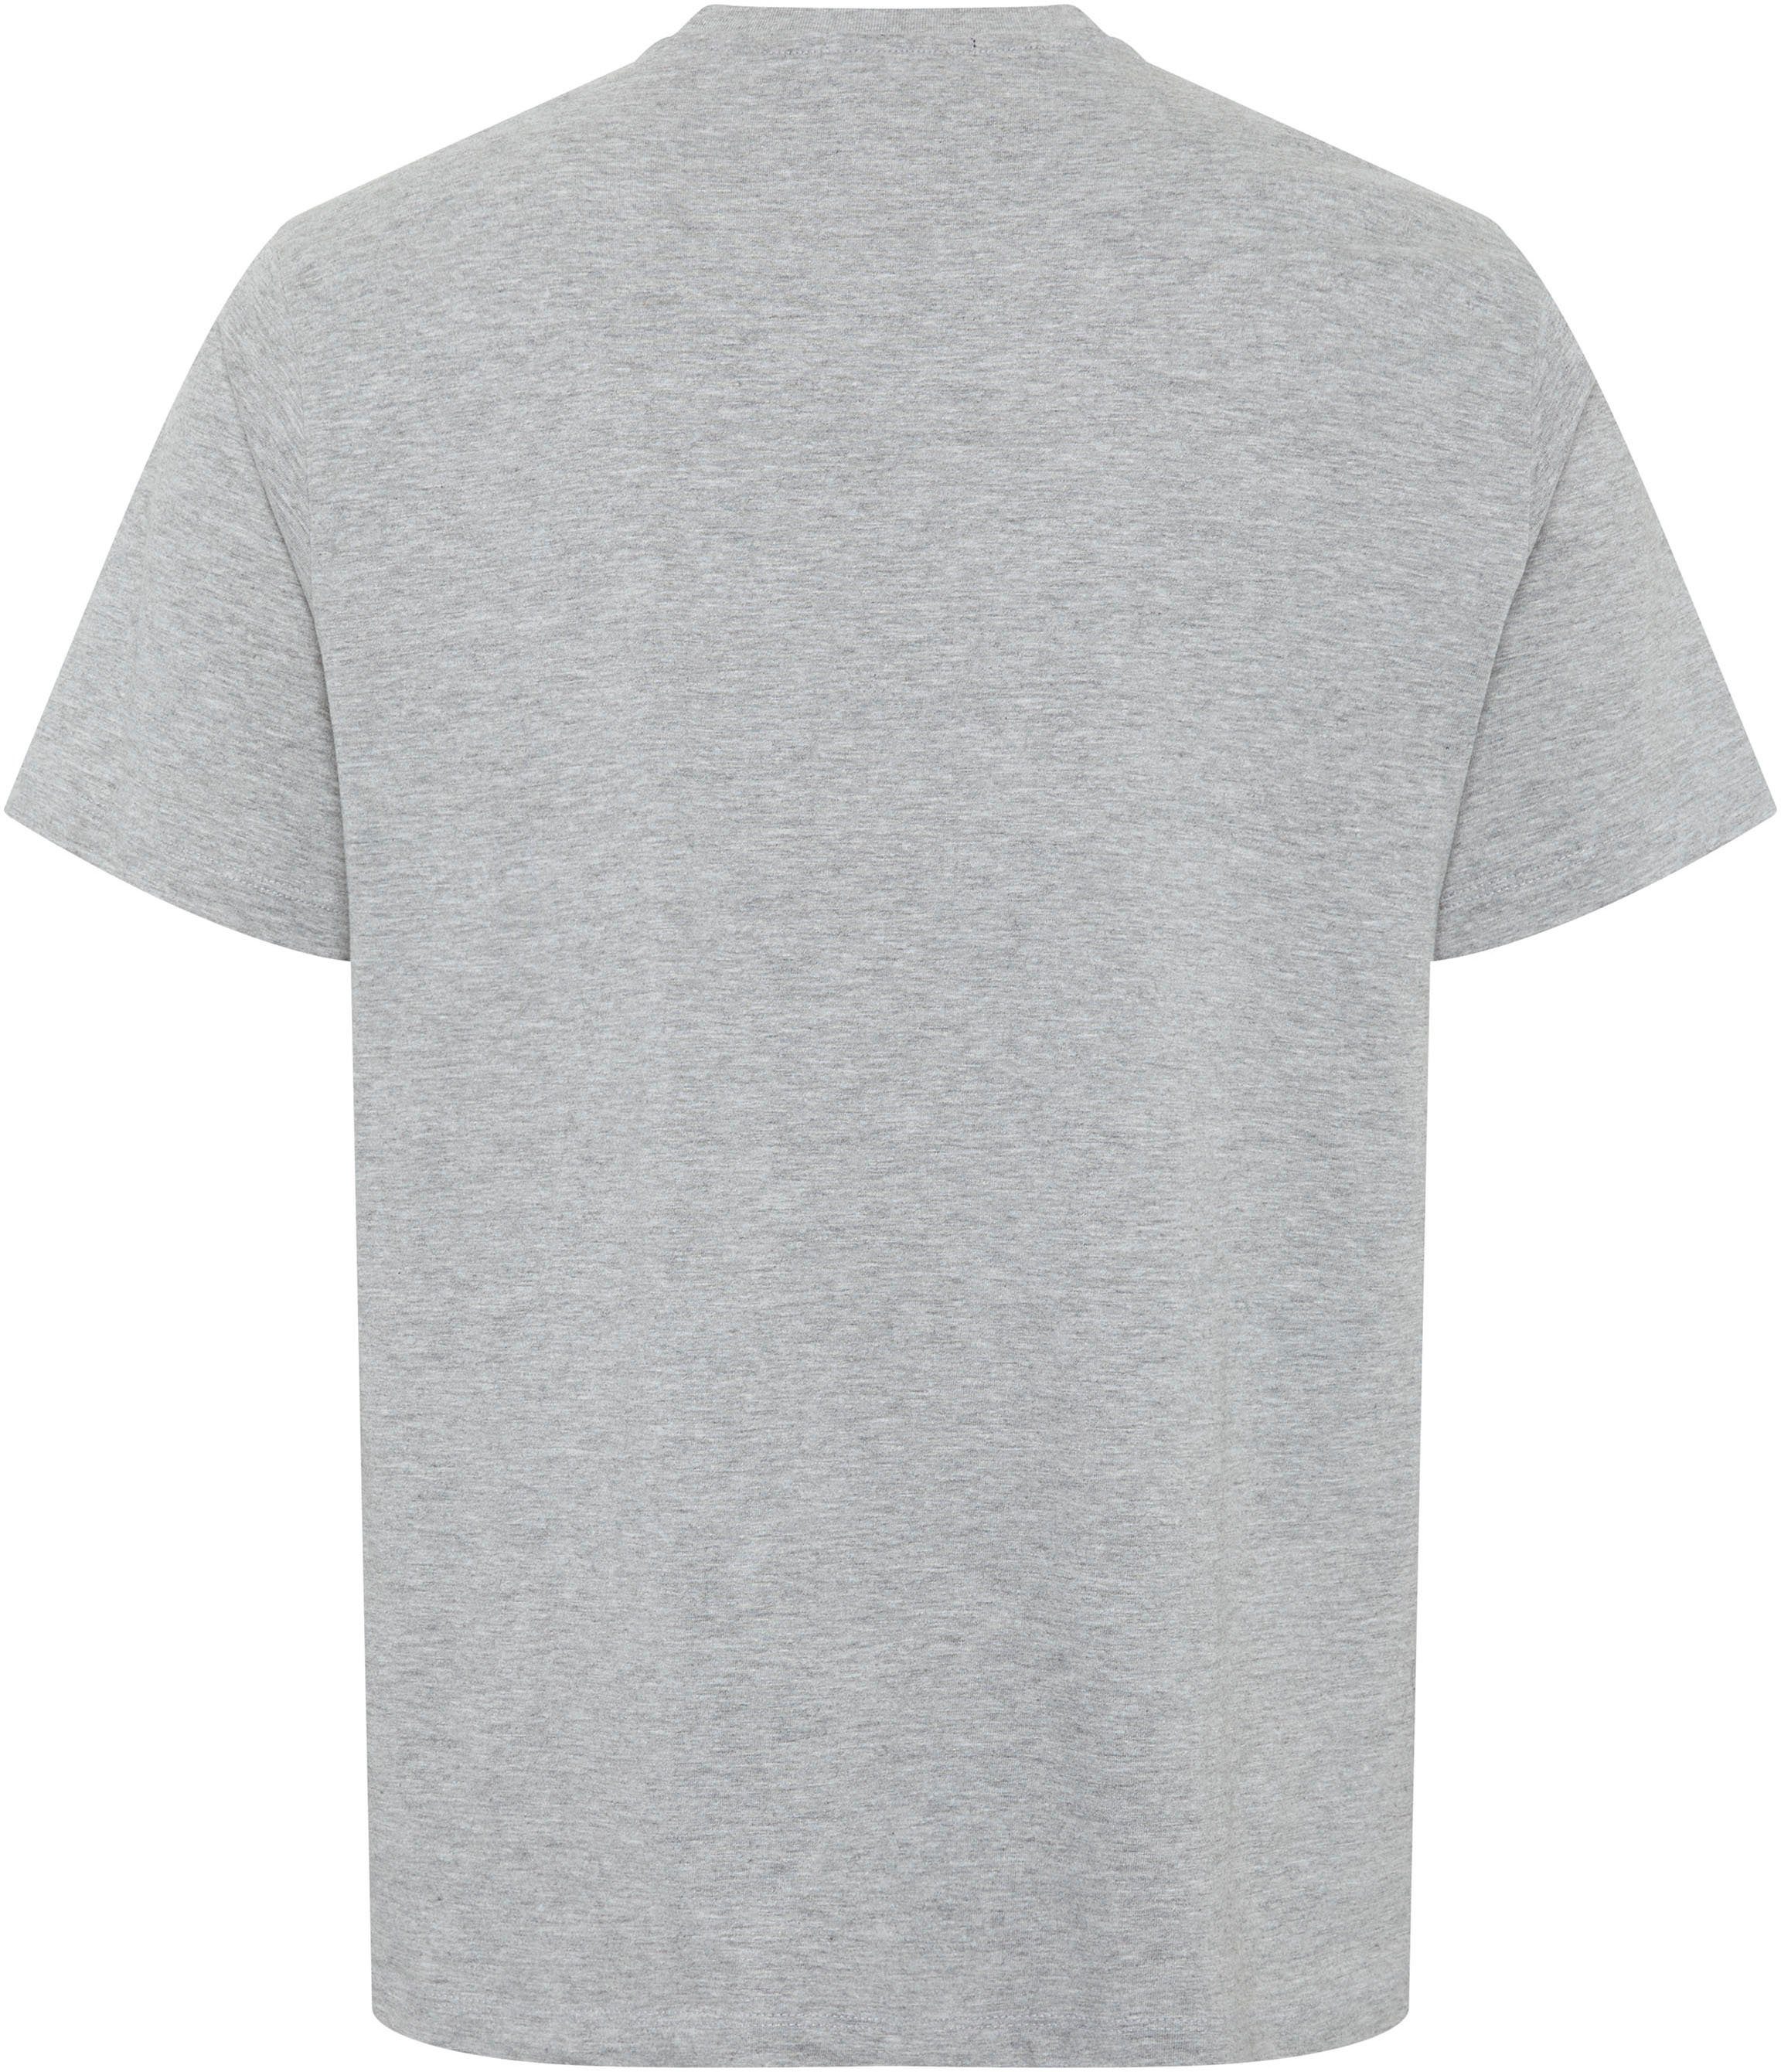 Chiemsee Neutral T-Shirt Gray